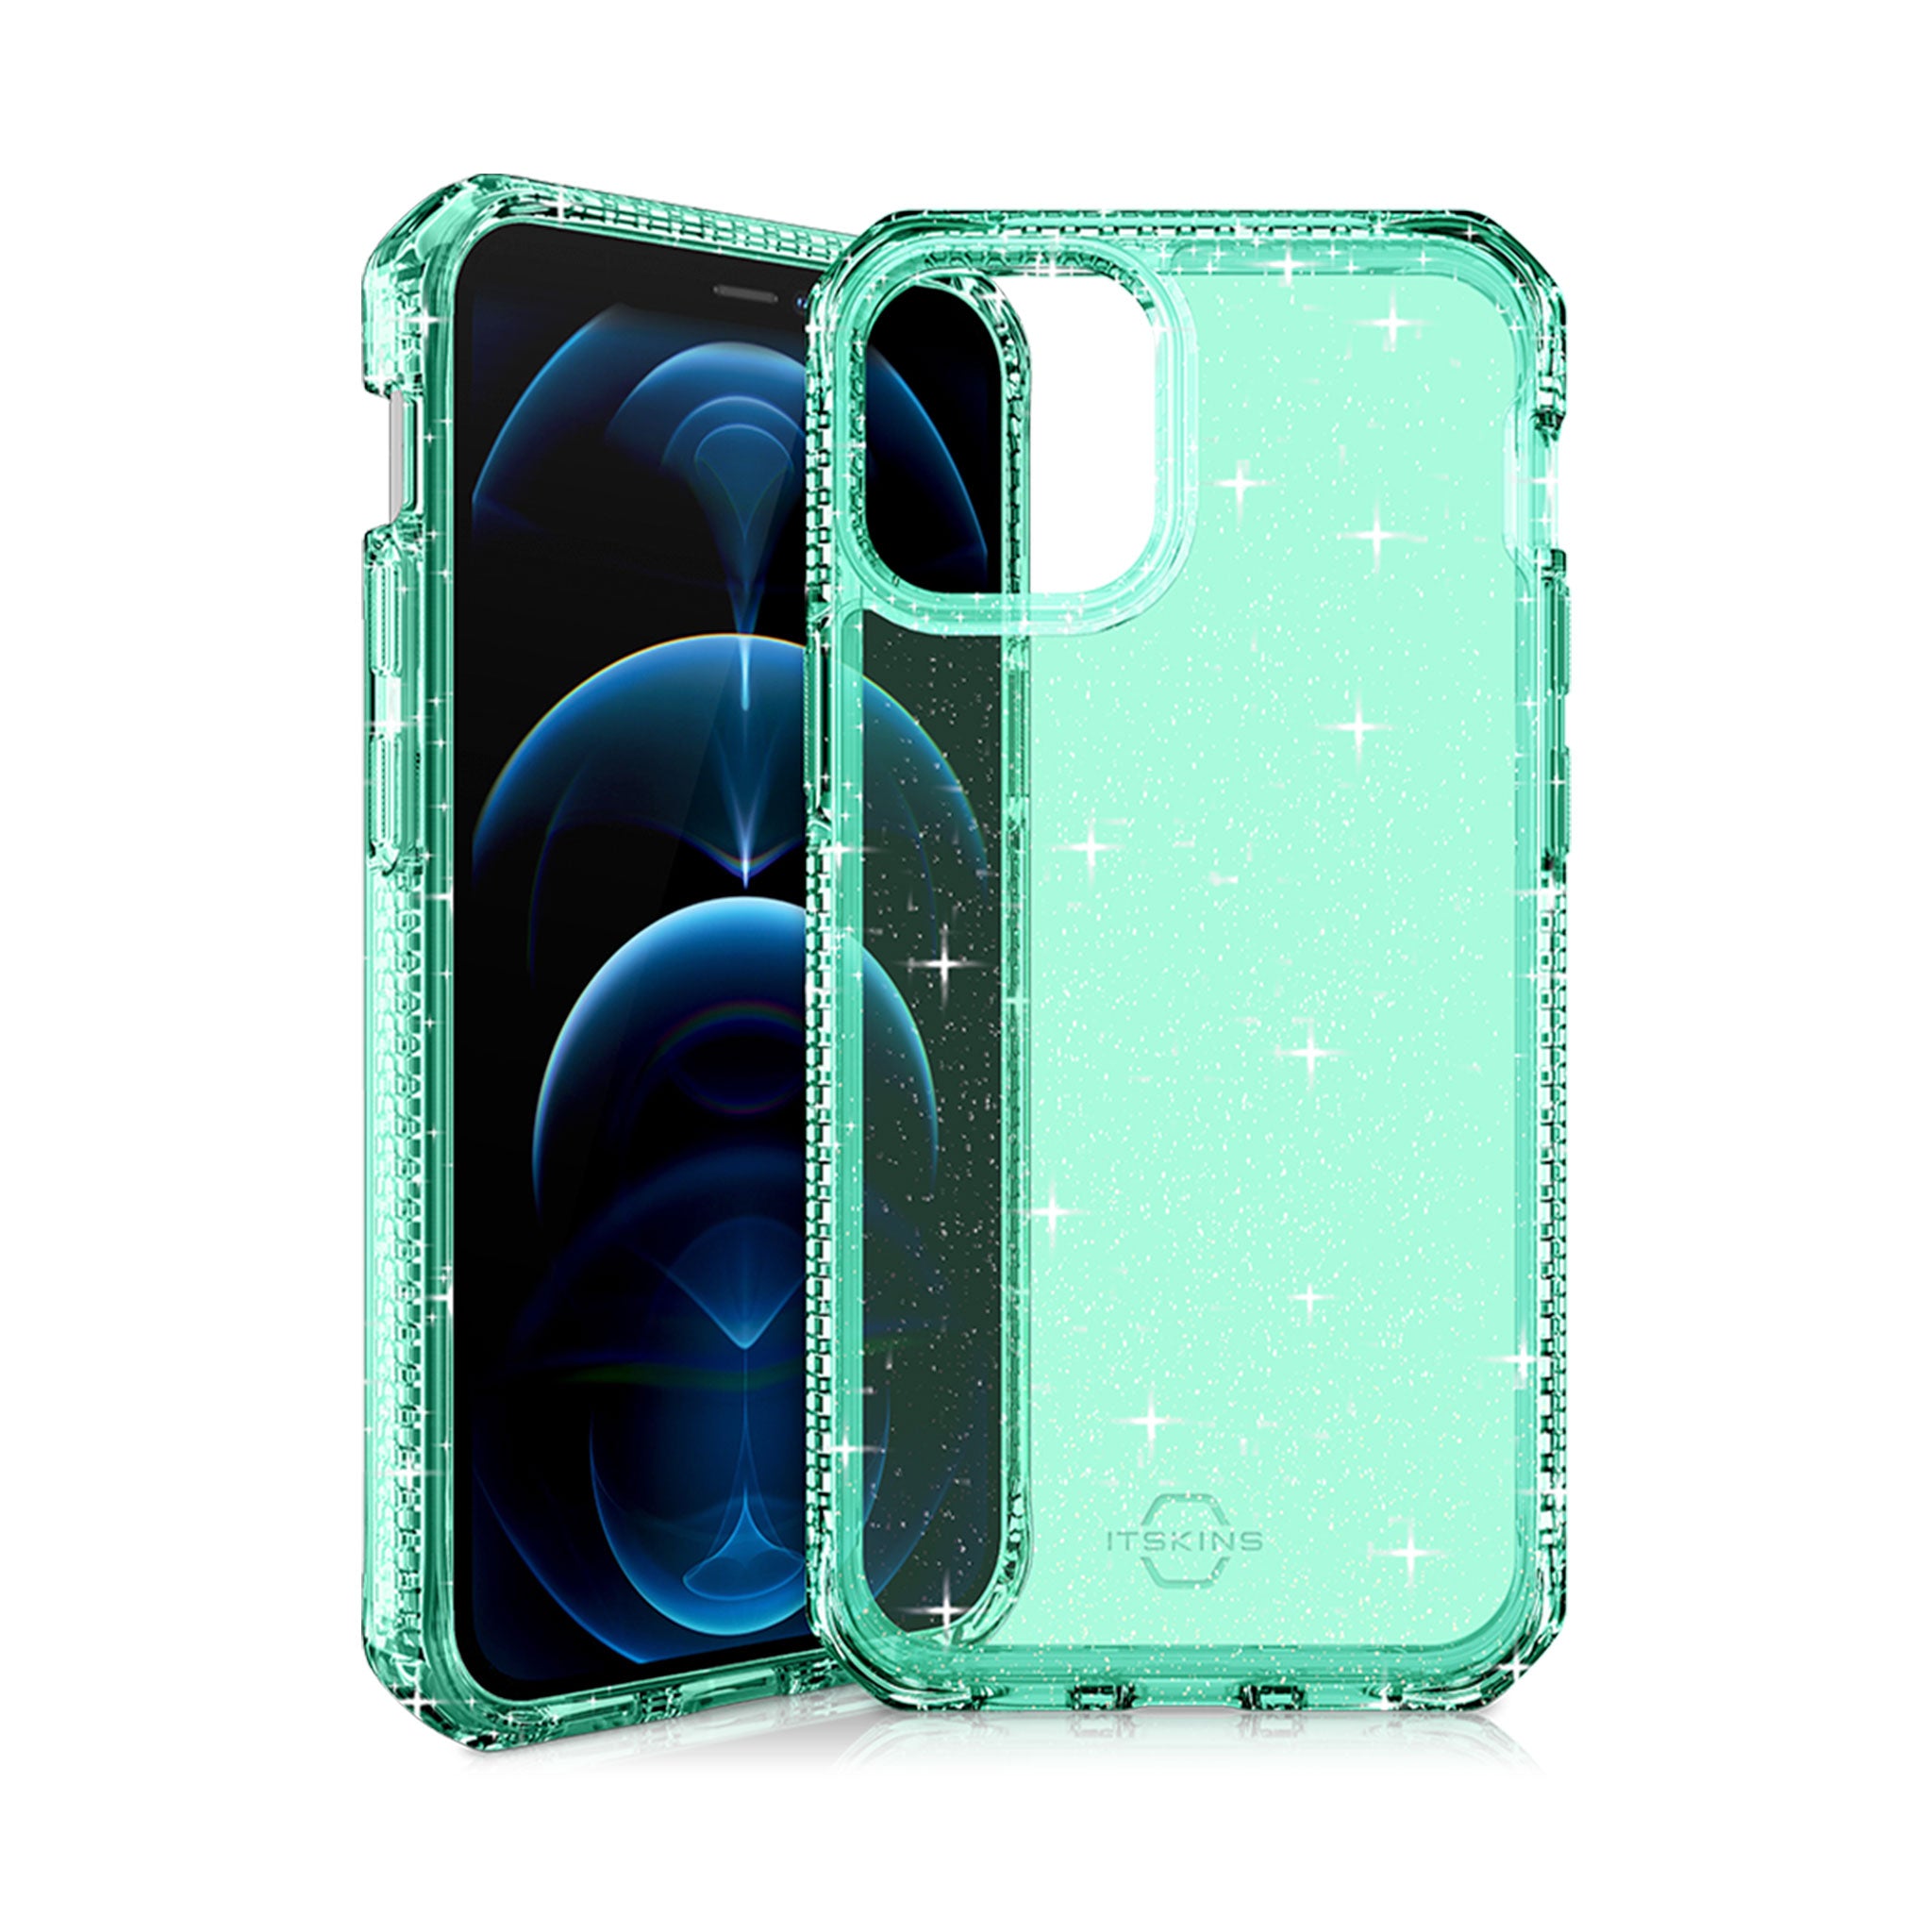 Itskins - Hybrid Spark Case For Apple Iphone 12 Pro Max - Tiffany Green